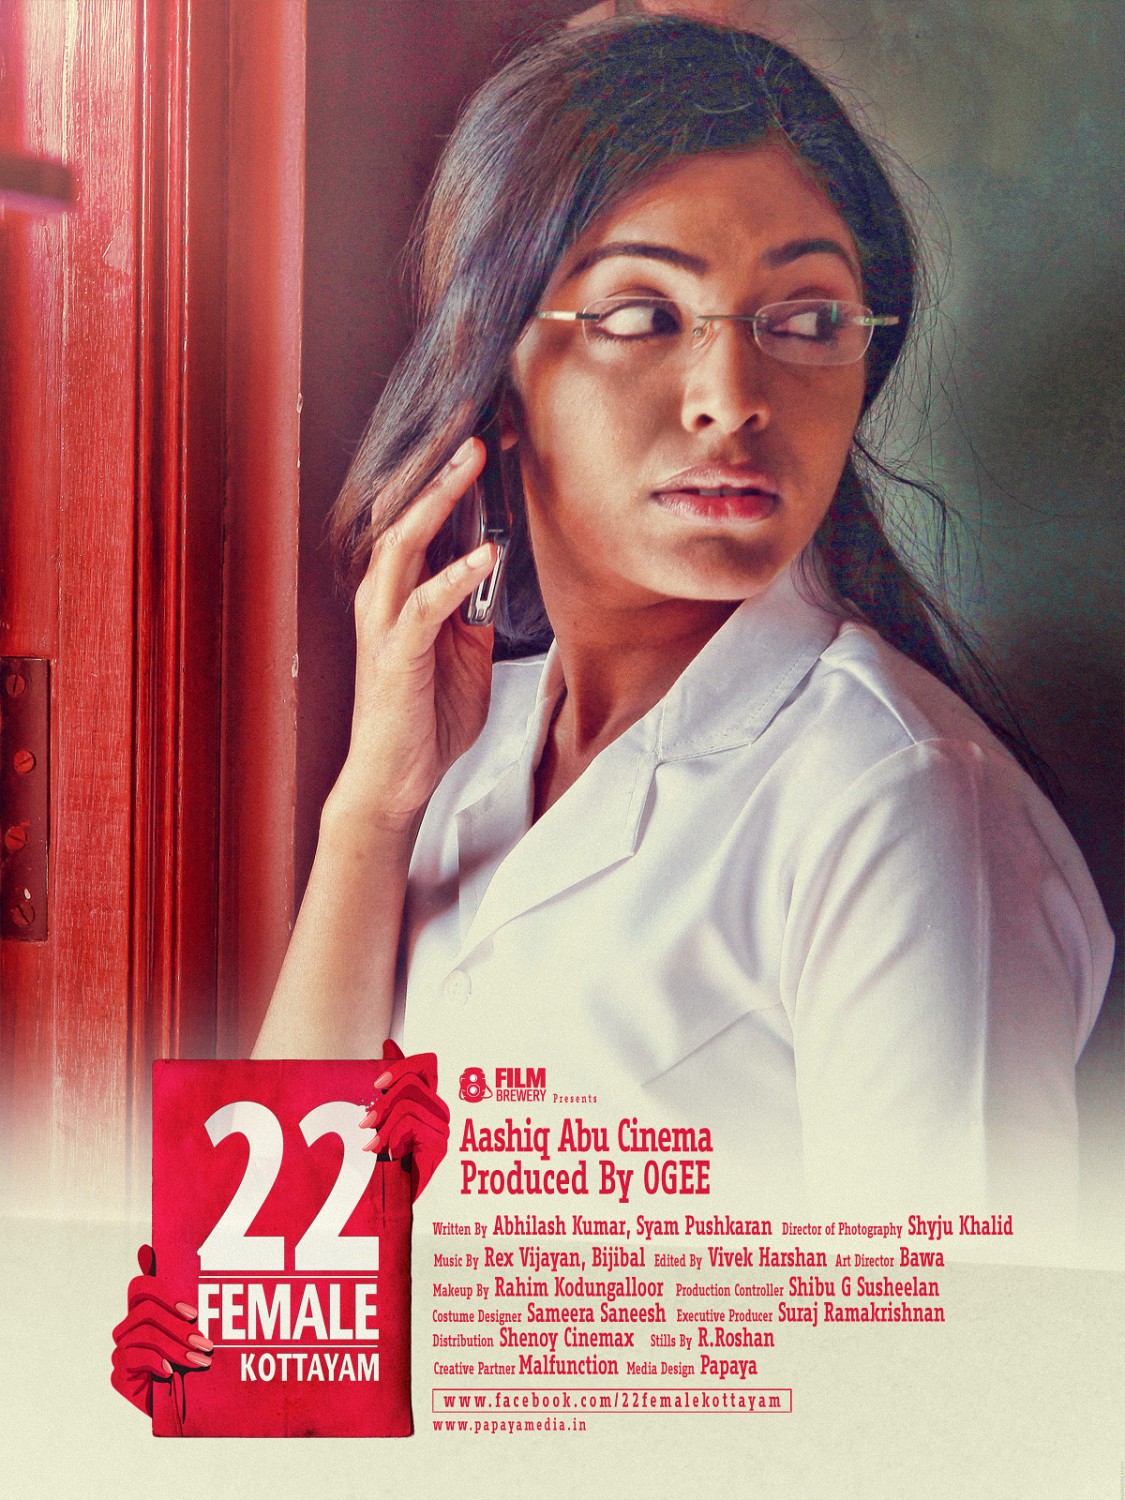 Extra Large Movie Poster Image for 22 Female Kottayam (#24 of 28)